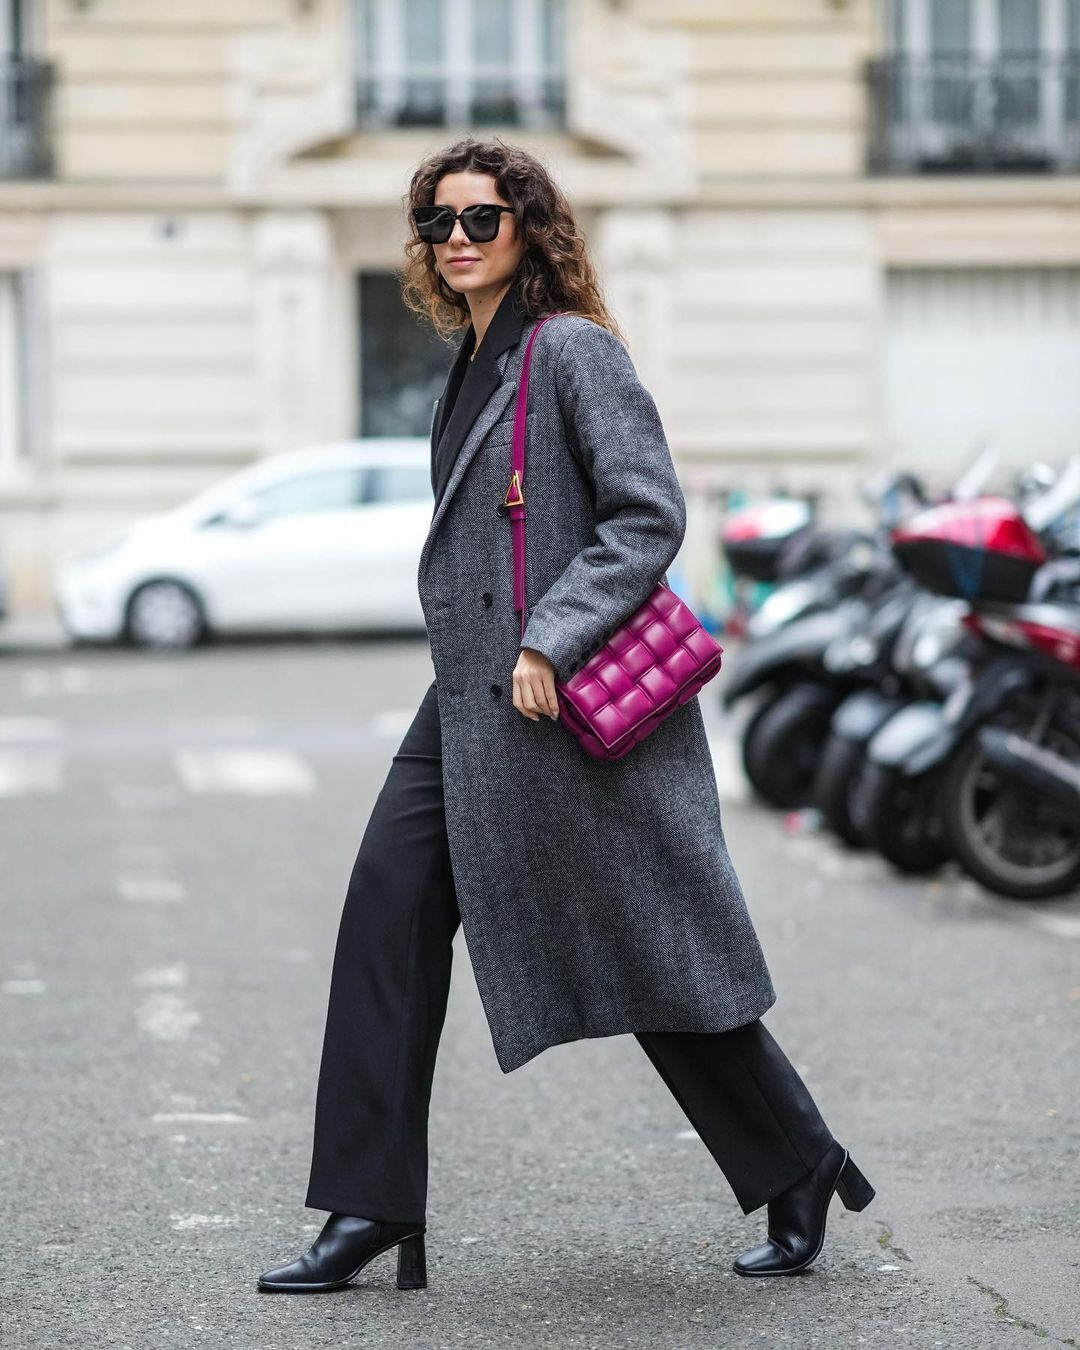 Яскрава сумочка стала акцентною для образу з класичним сірим пальто та брюками